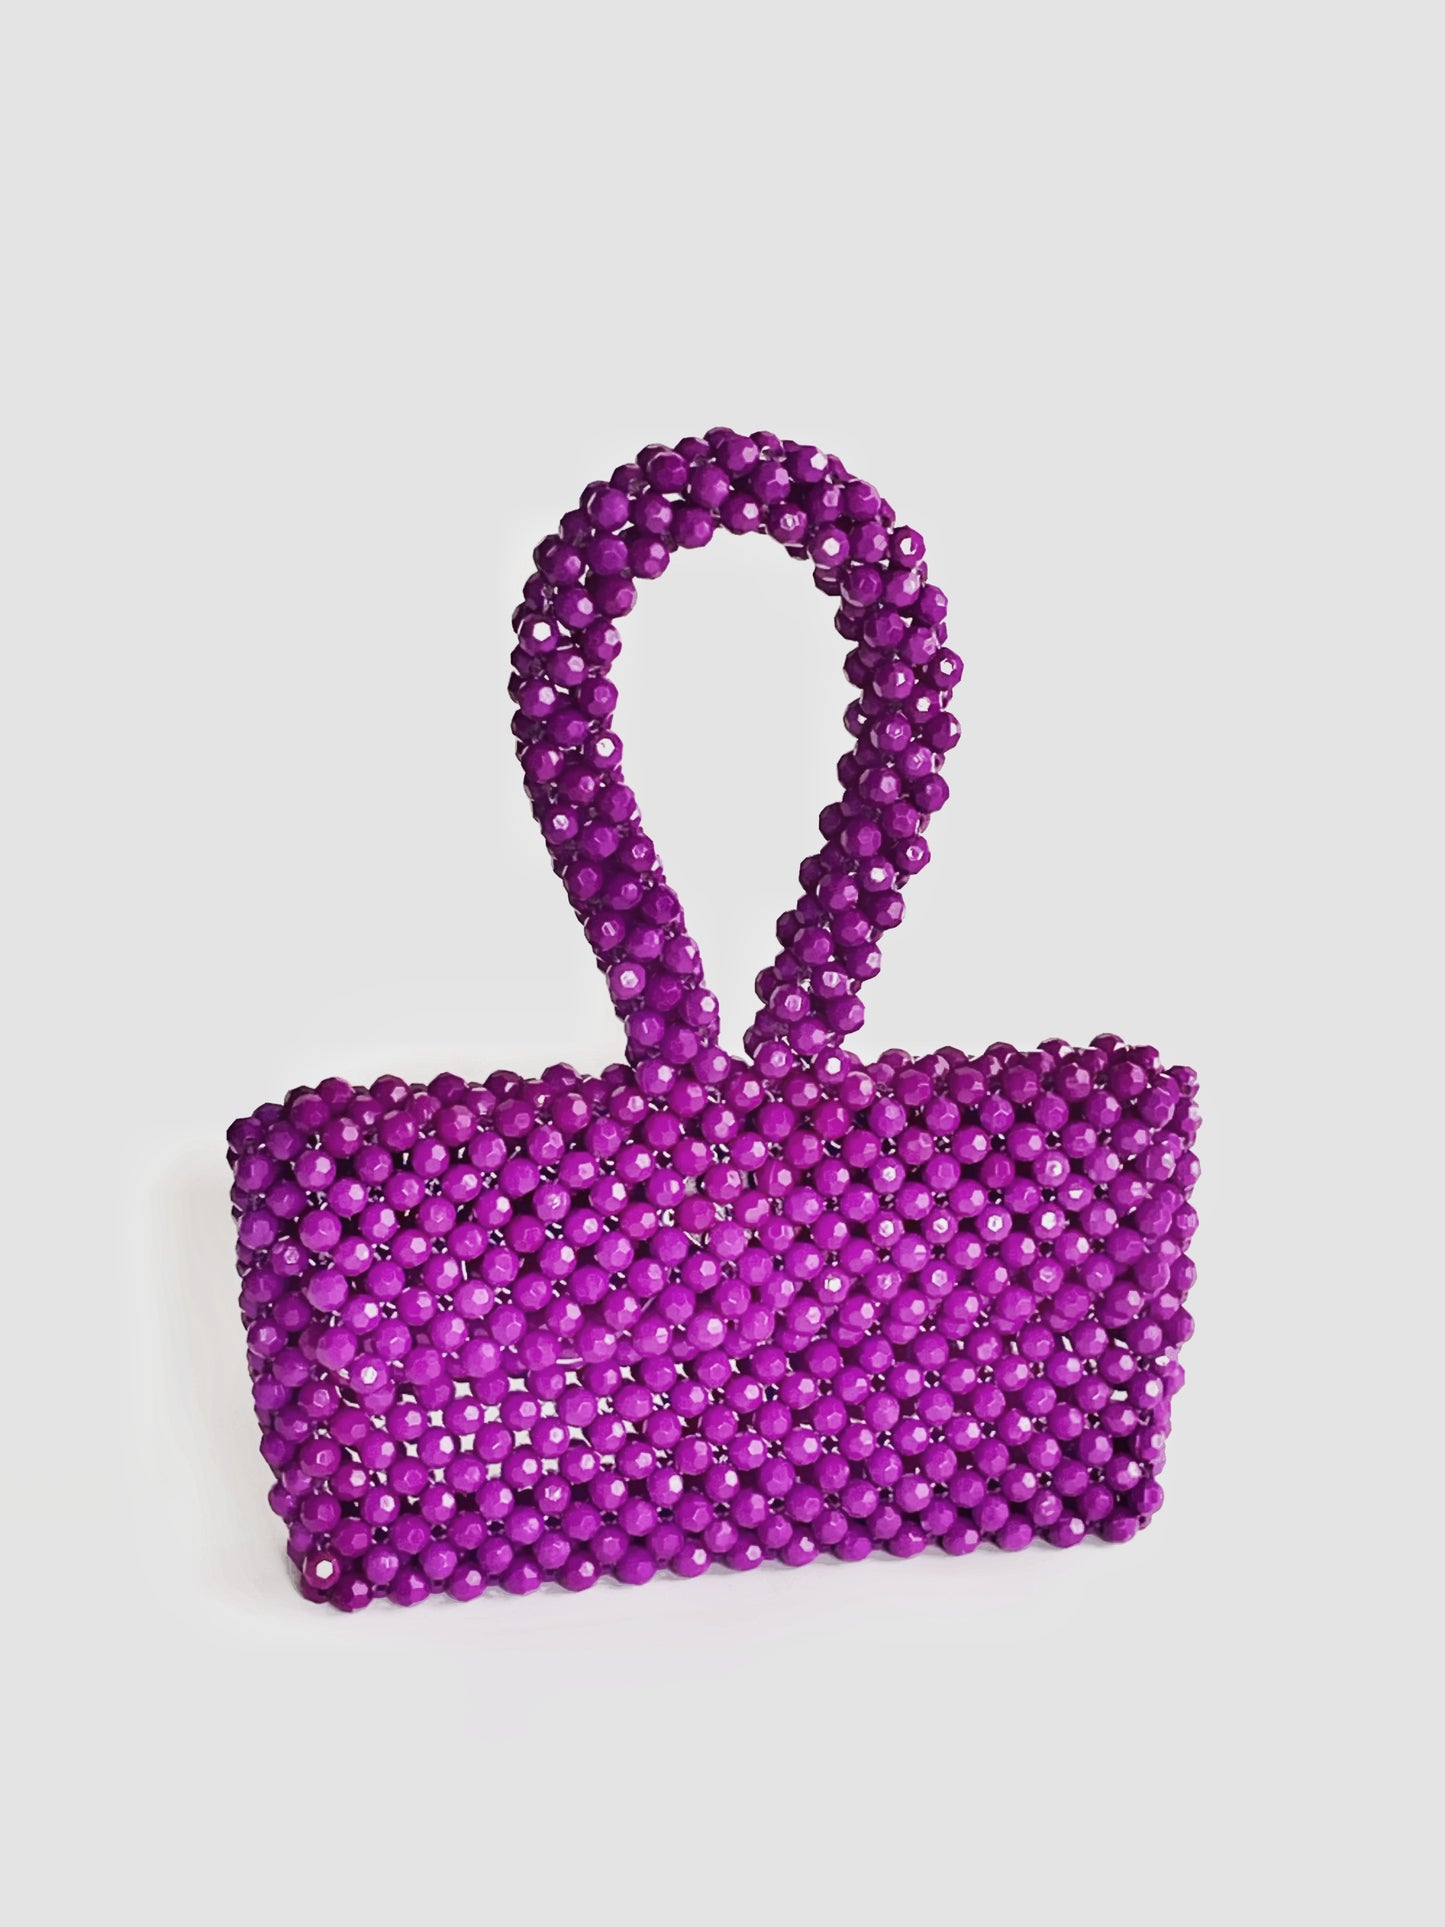 Purple Bag